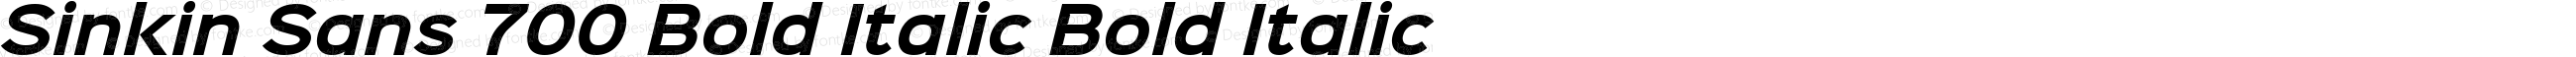 Sinkin Sans 700 Bold Italic Bold Italic